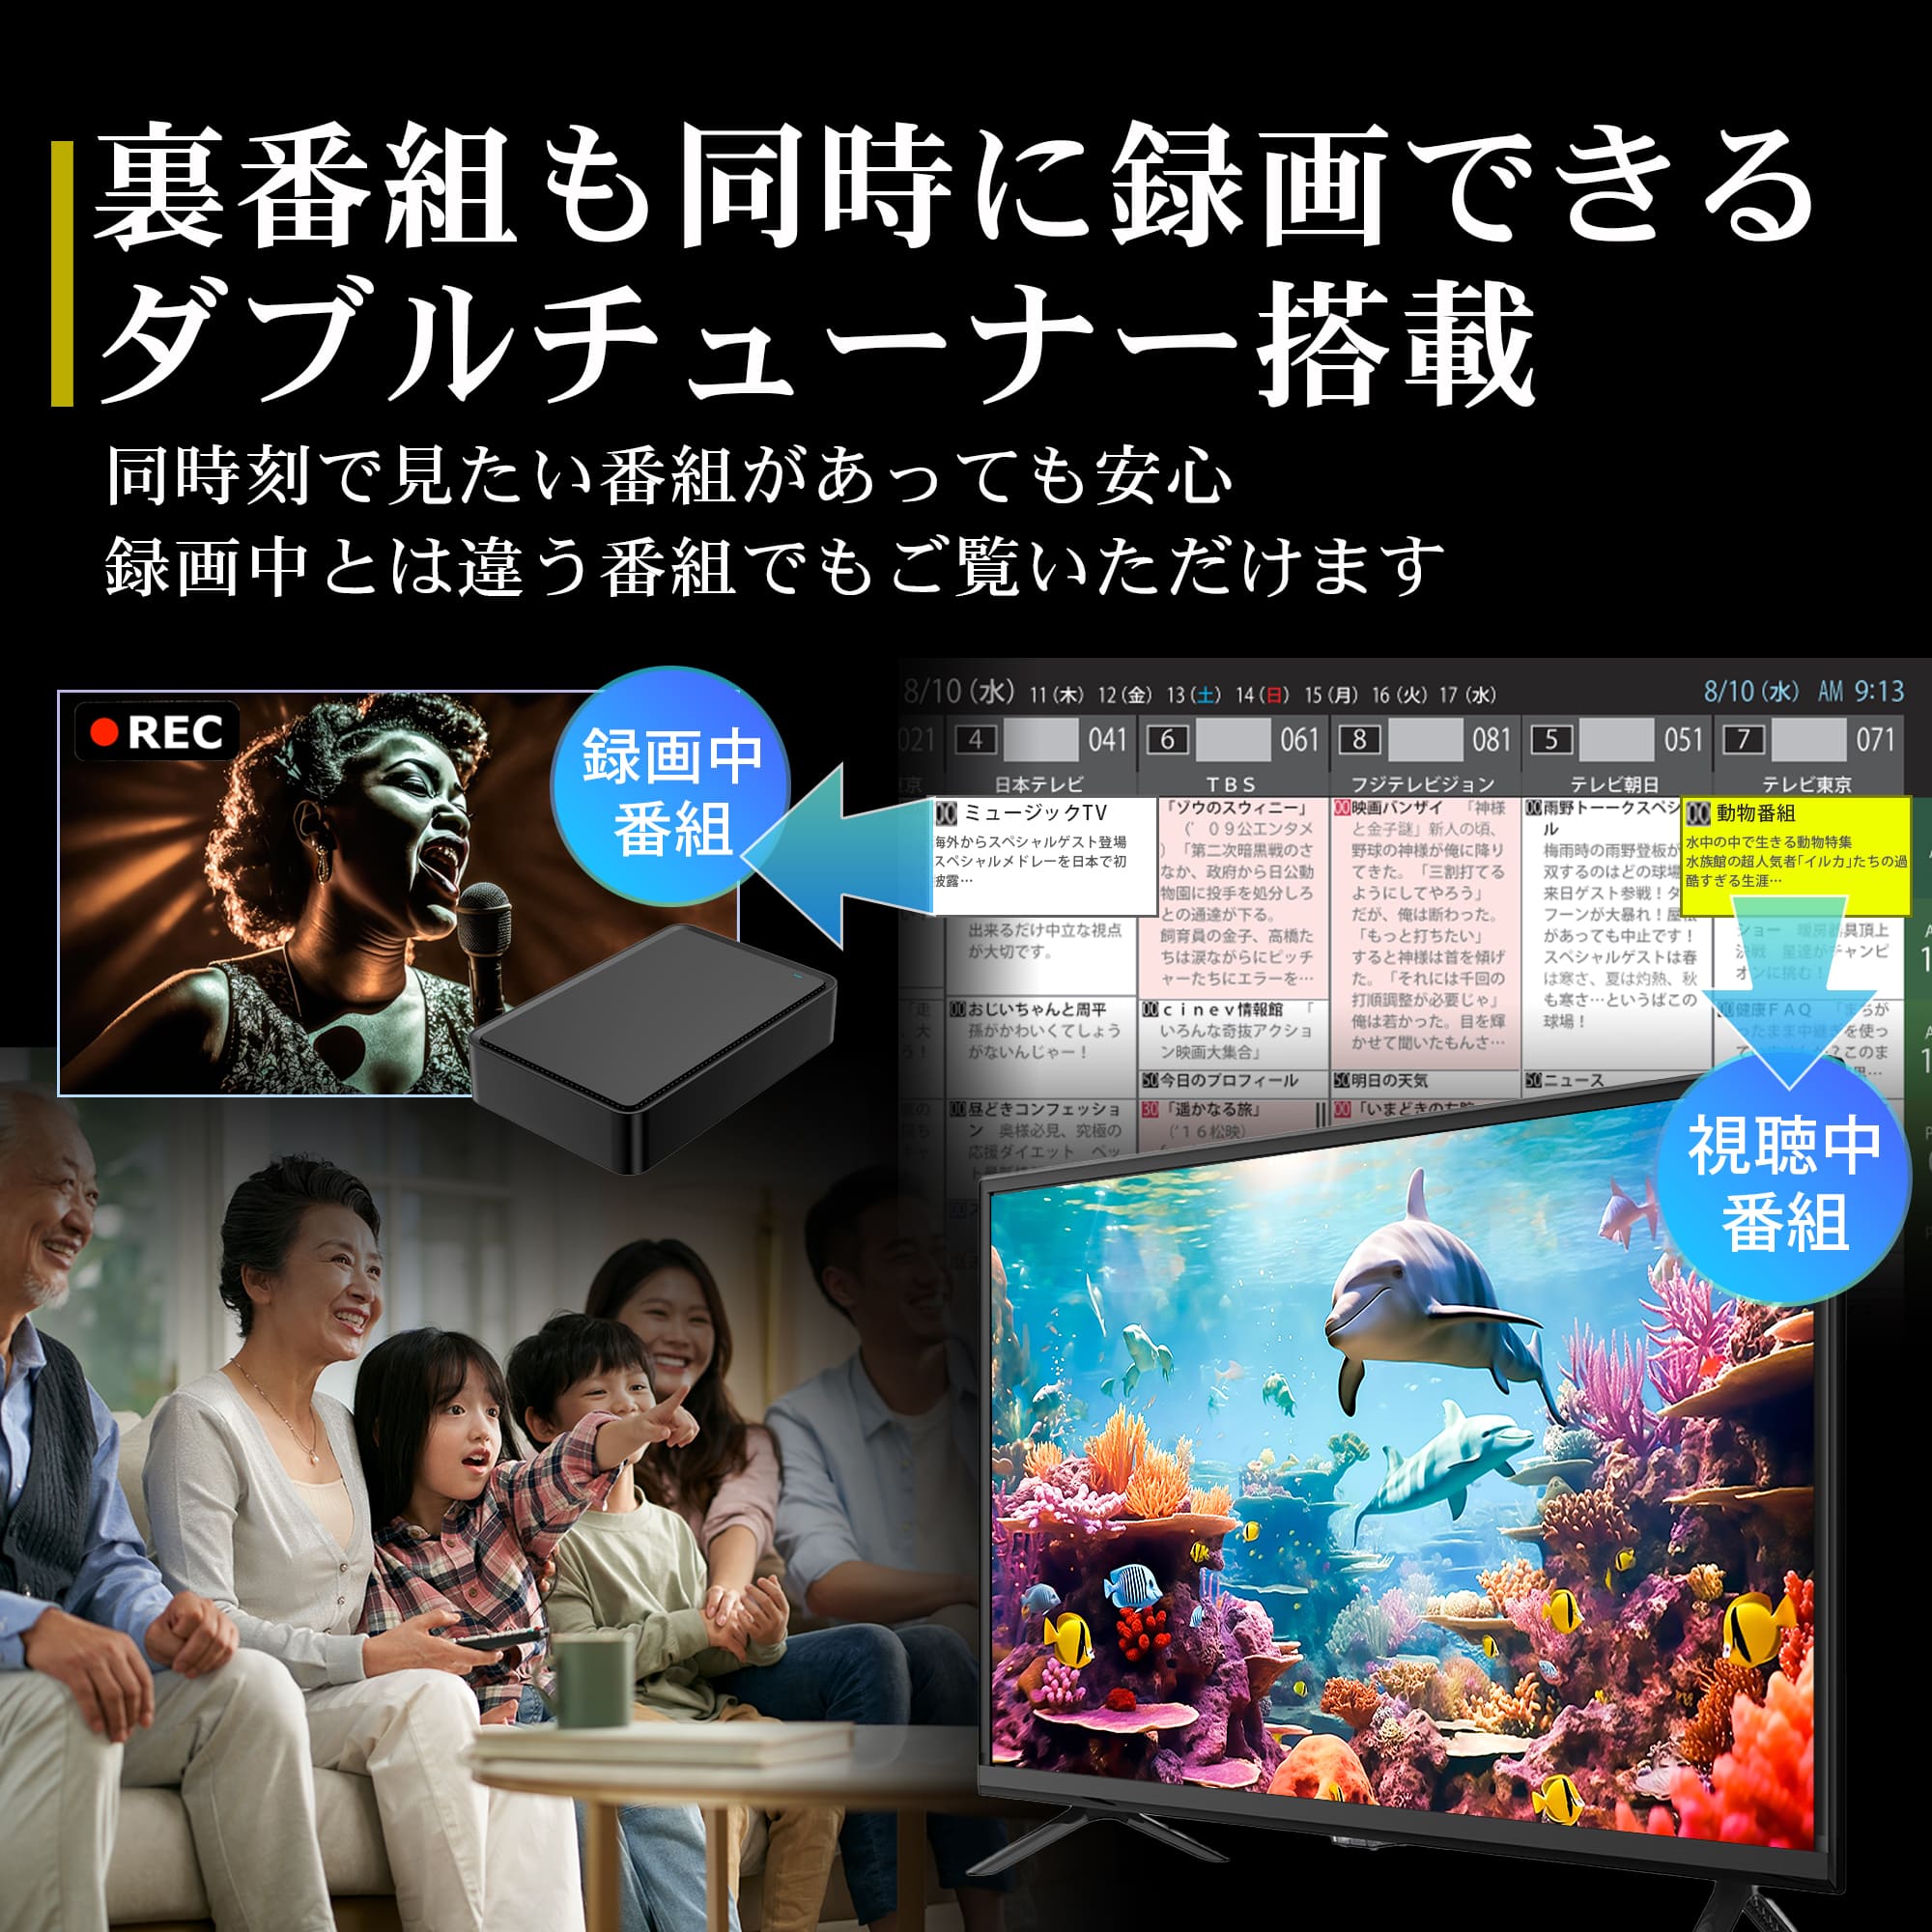 IRIE テレビ 24インチ ハイビジョン 東芝 ボード内蔵 HDD録画 対応 W